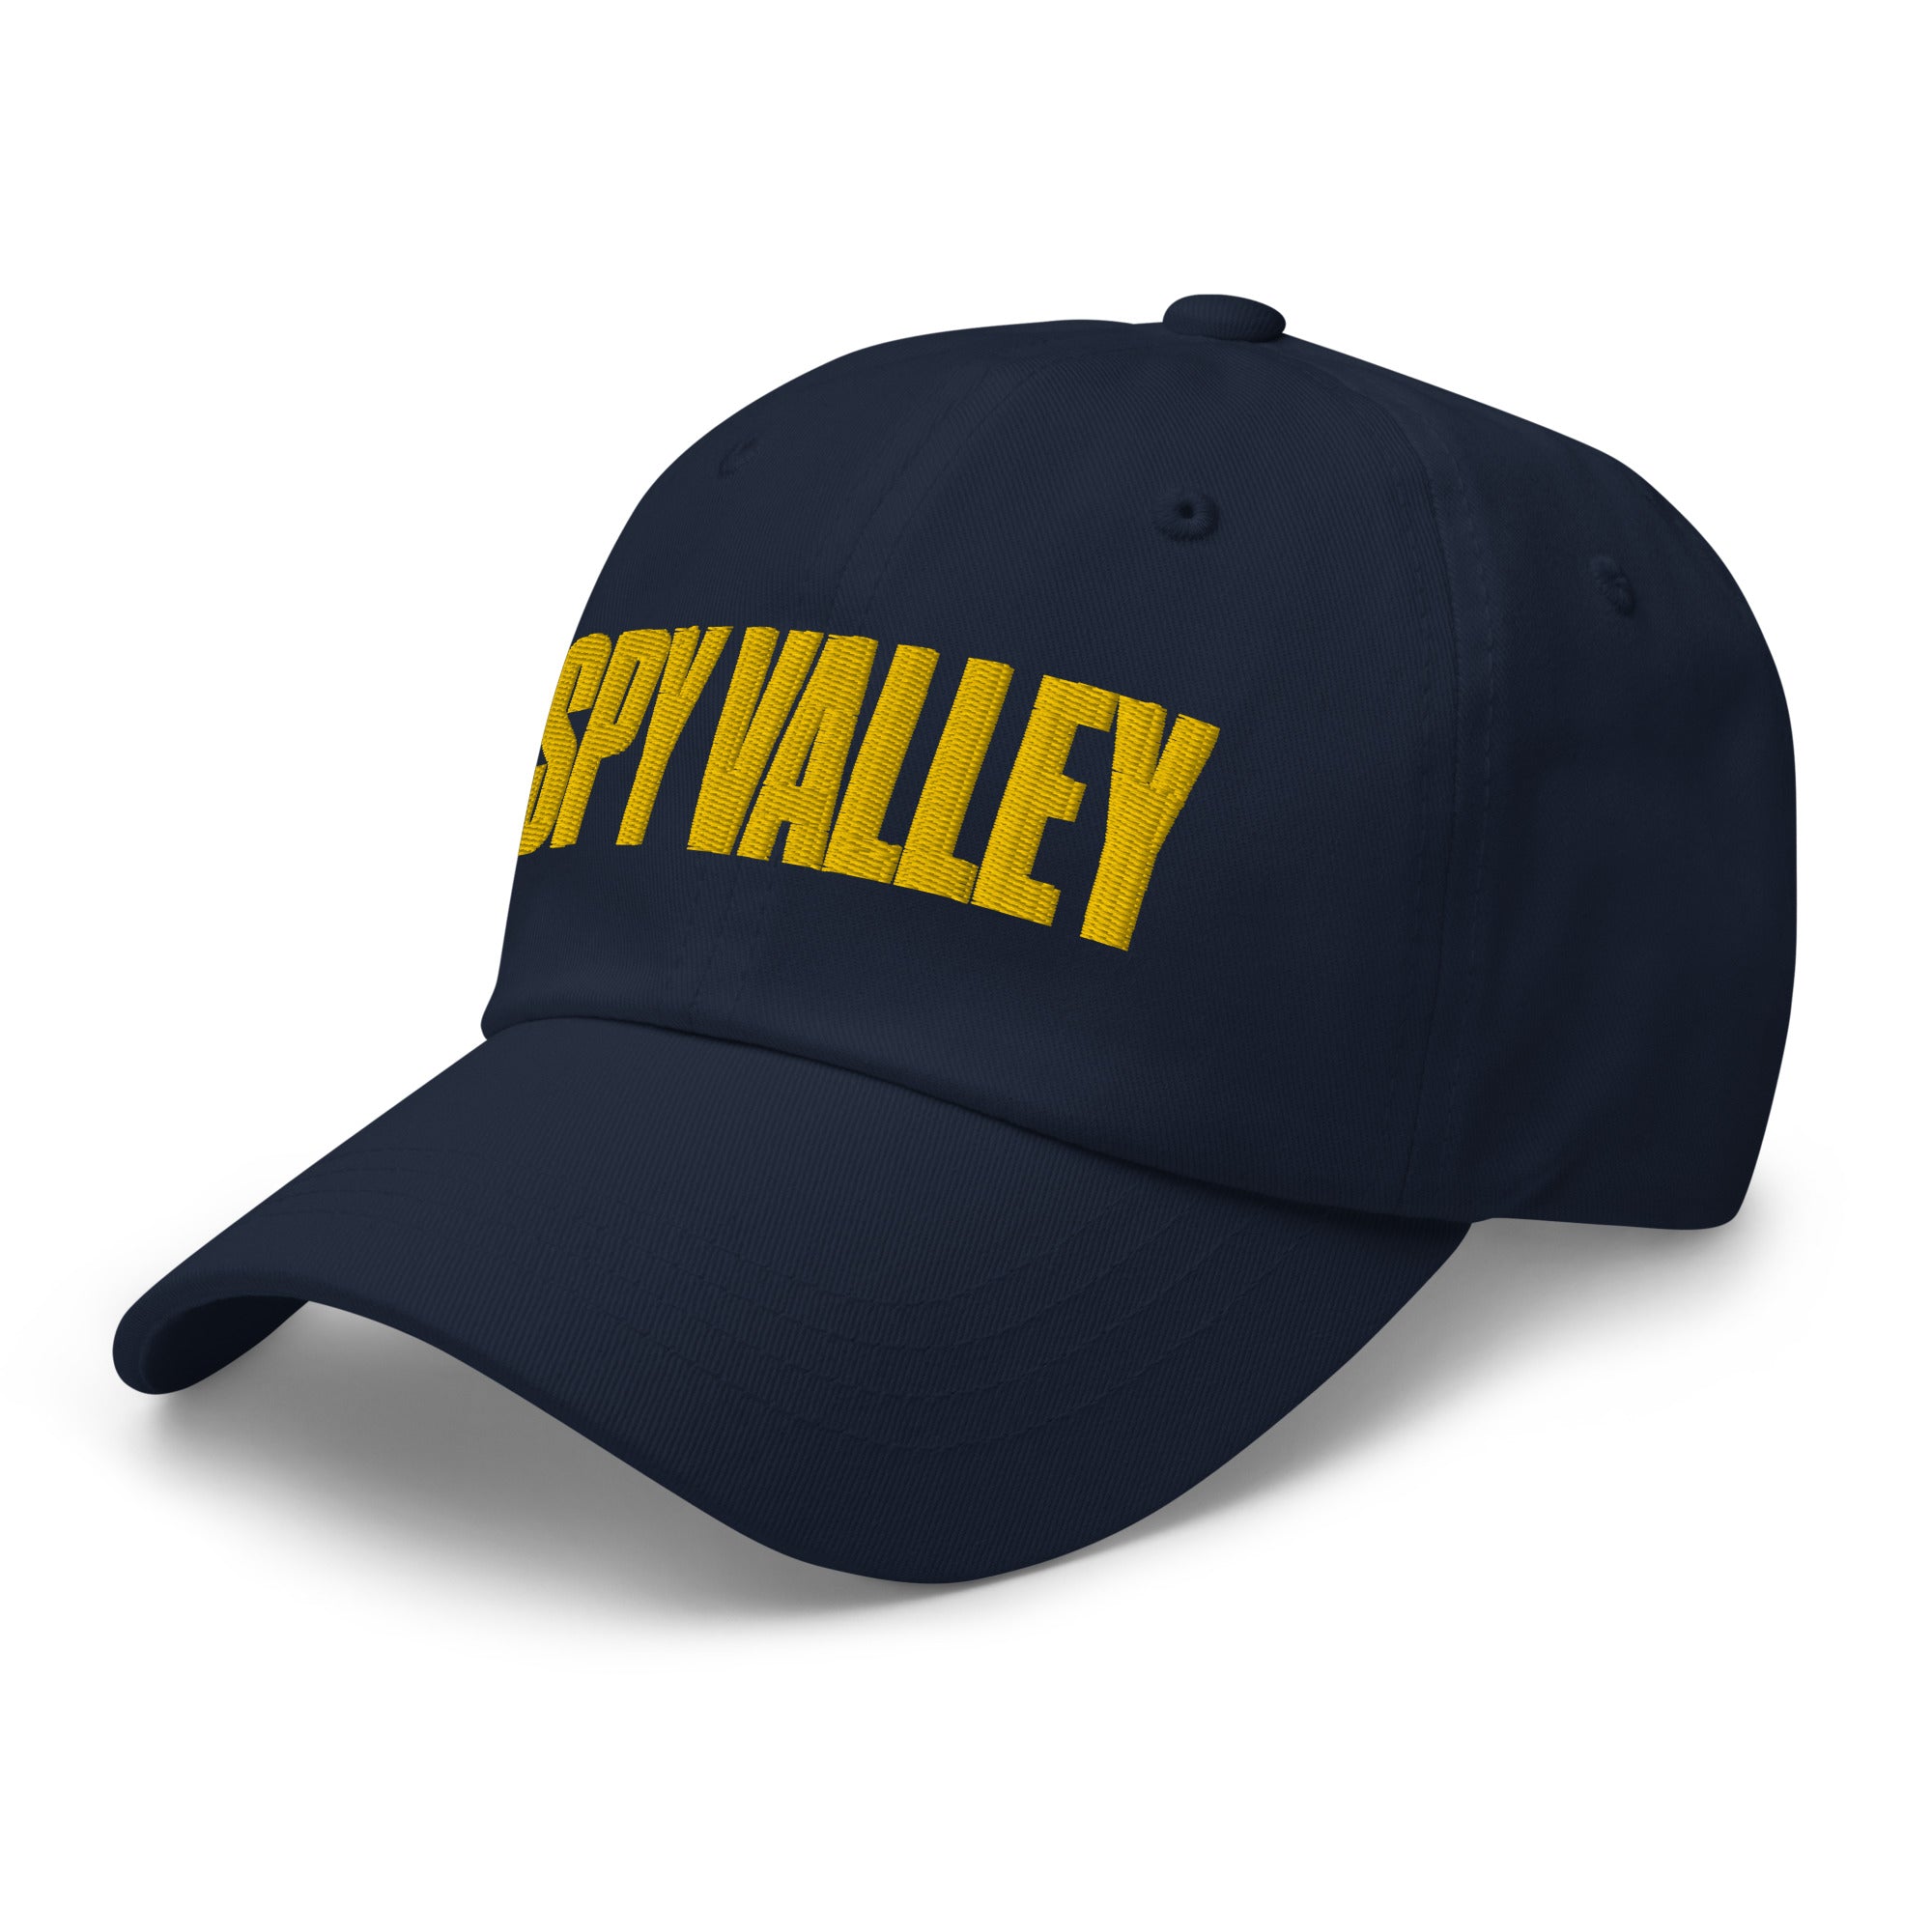 Spy Valley Hat